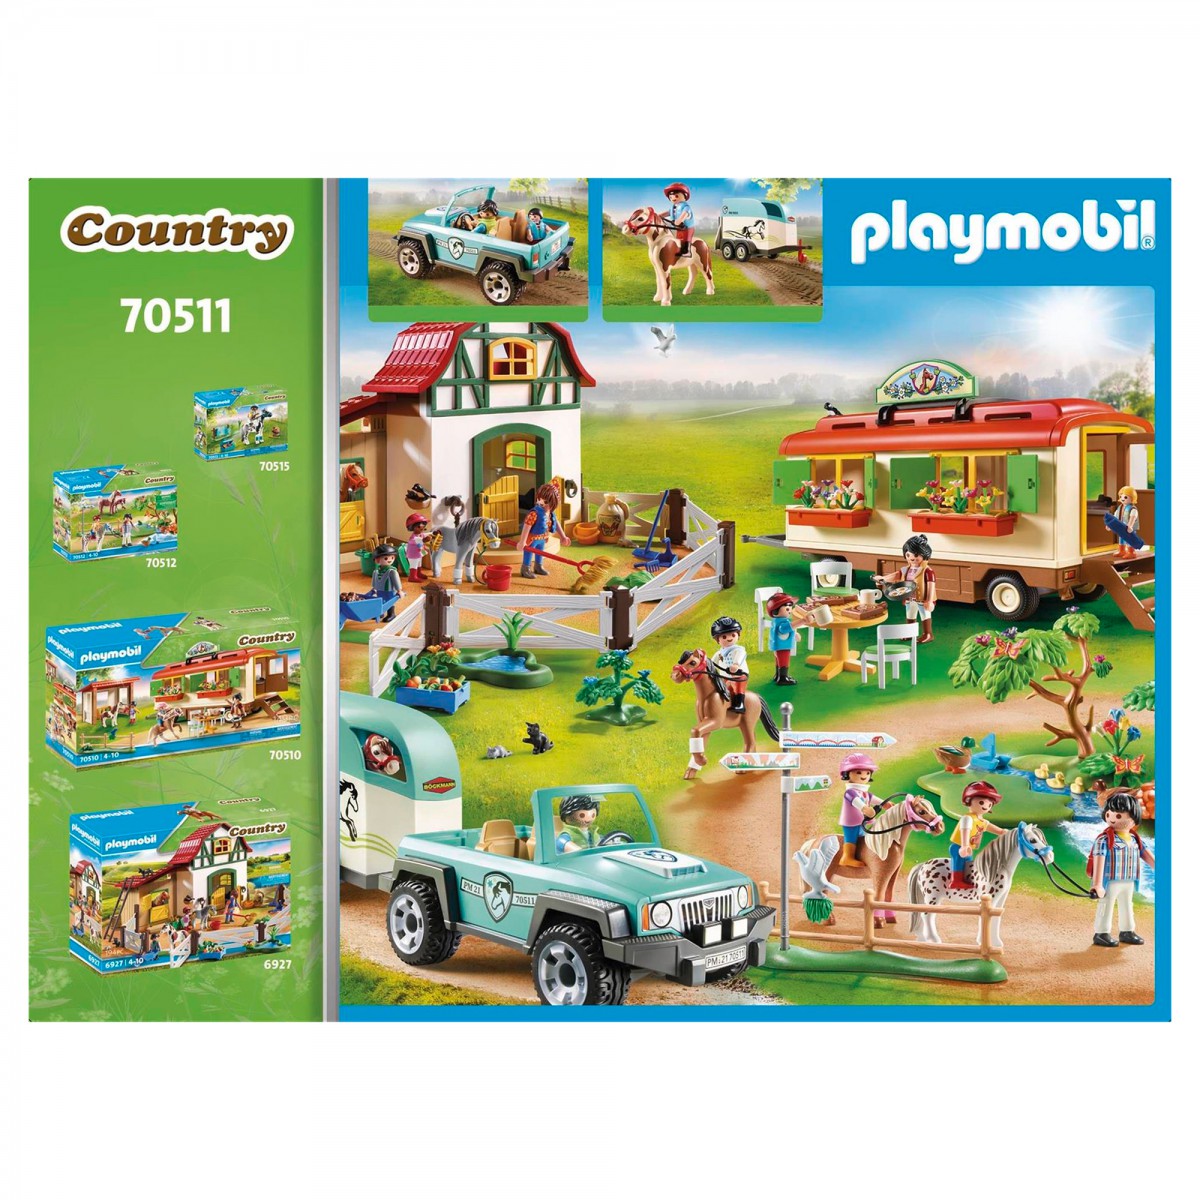 PLAYMOBIL 70511 - Country - Car with Pony Trailer - Playpolis